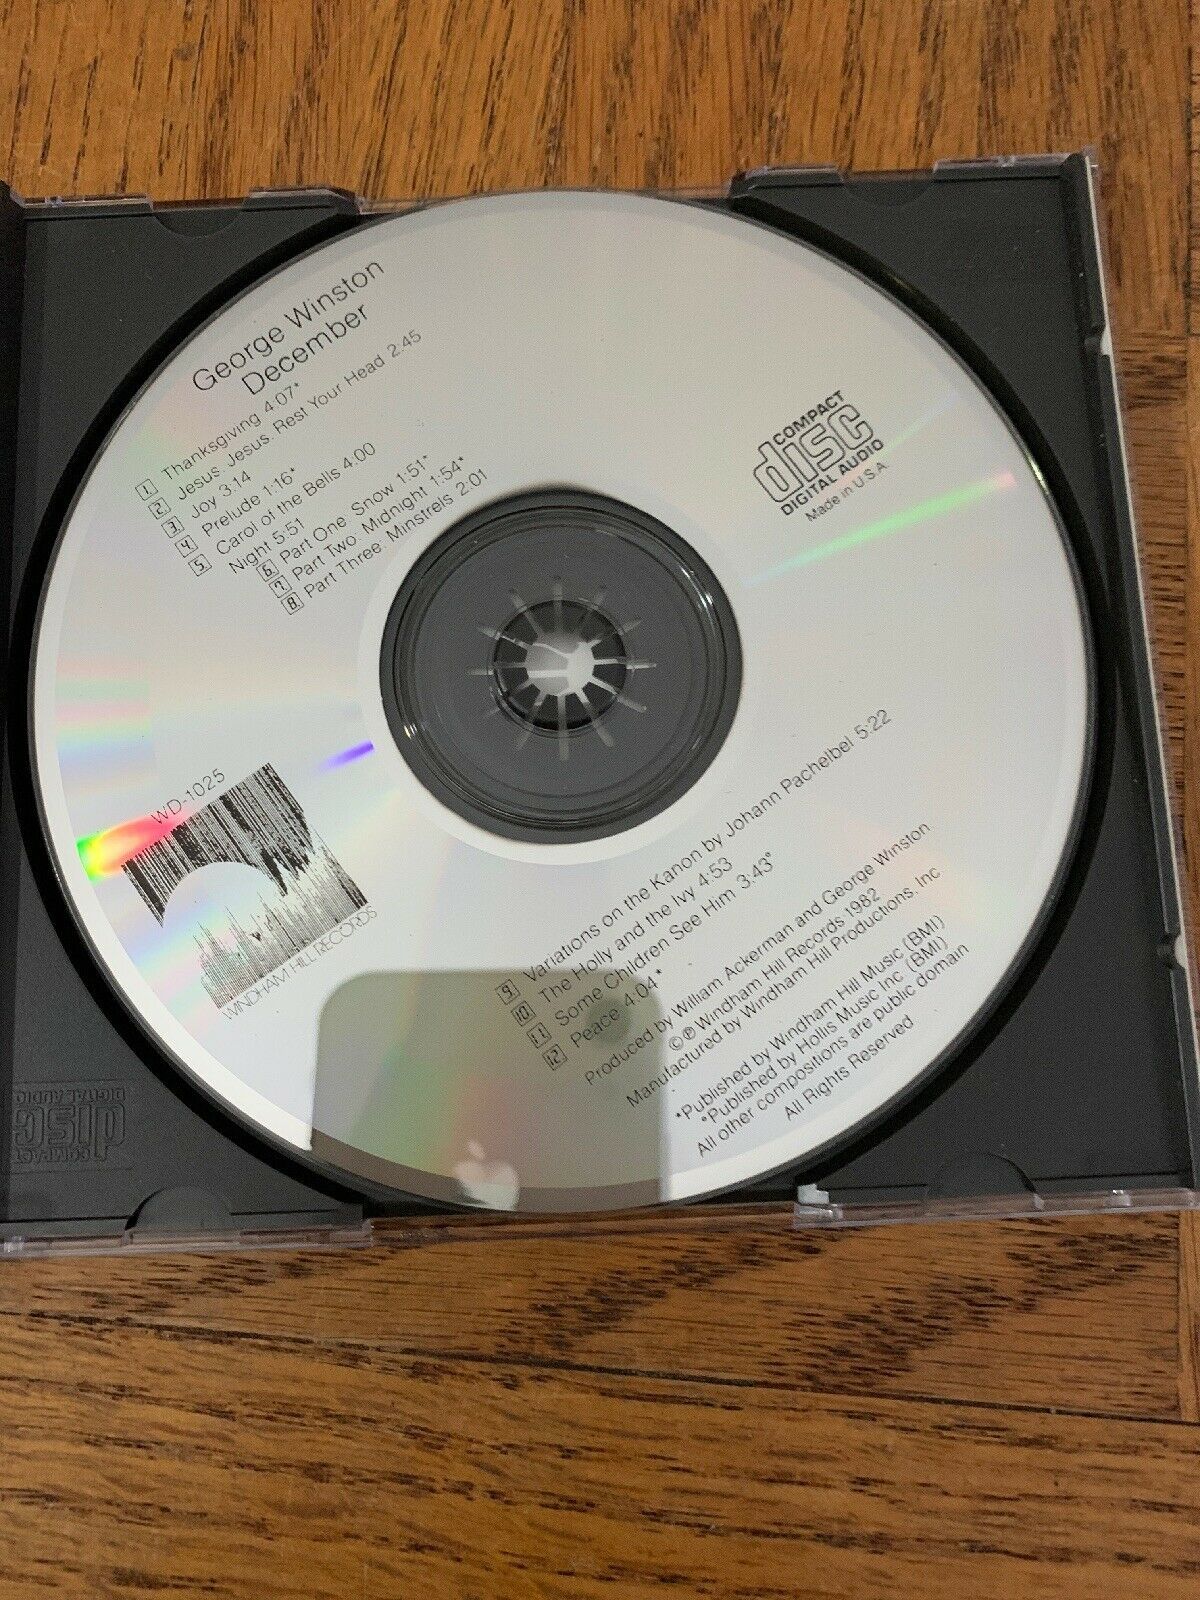 George Winston December CD - CDs